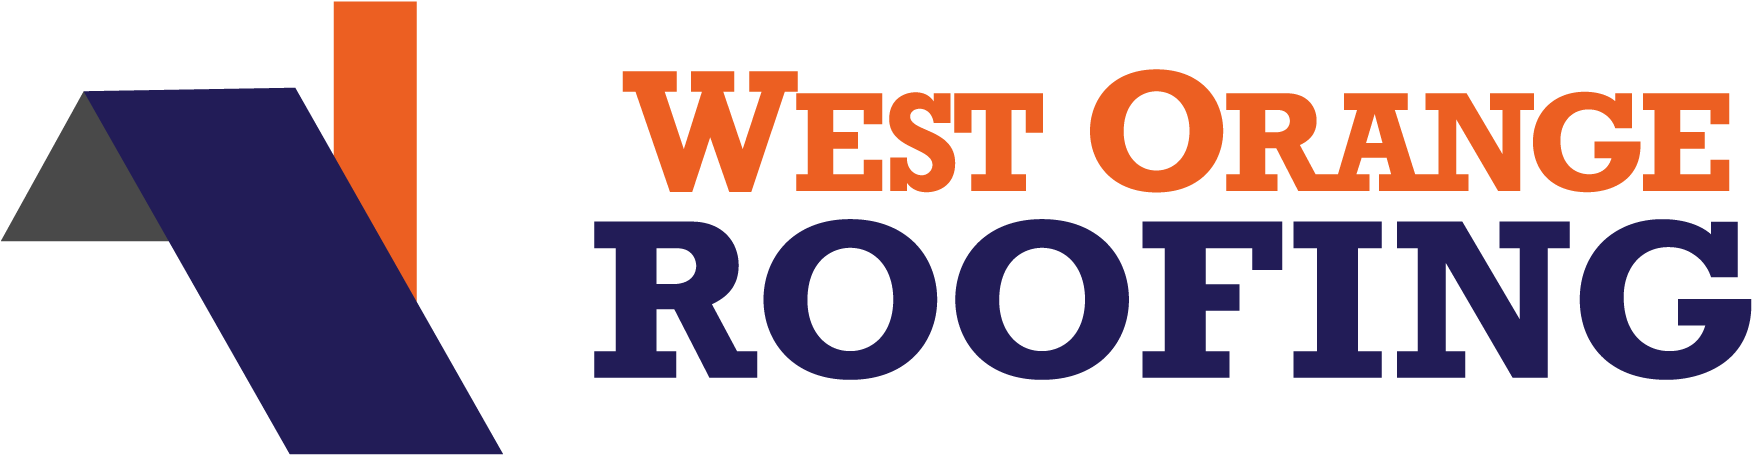 West Orange Roofing Inc. (1780x500)